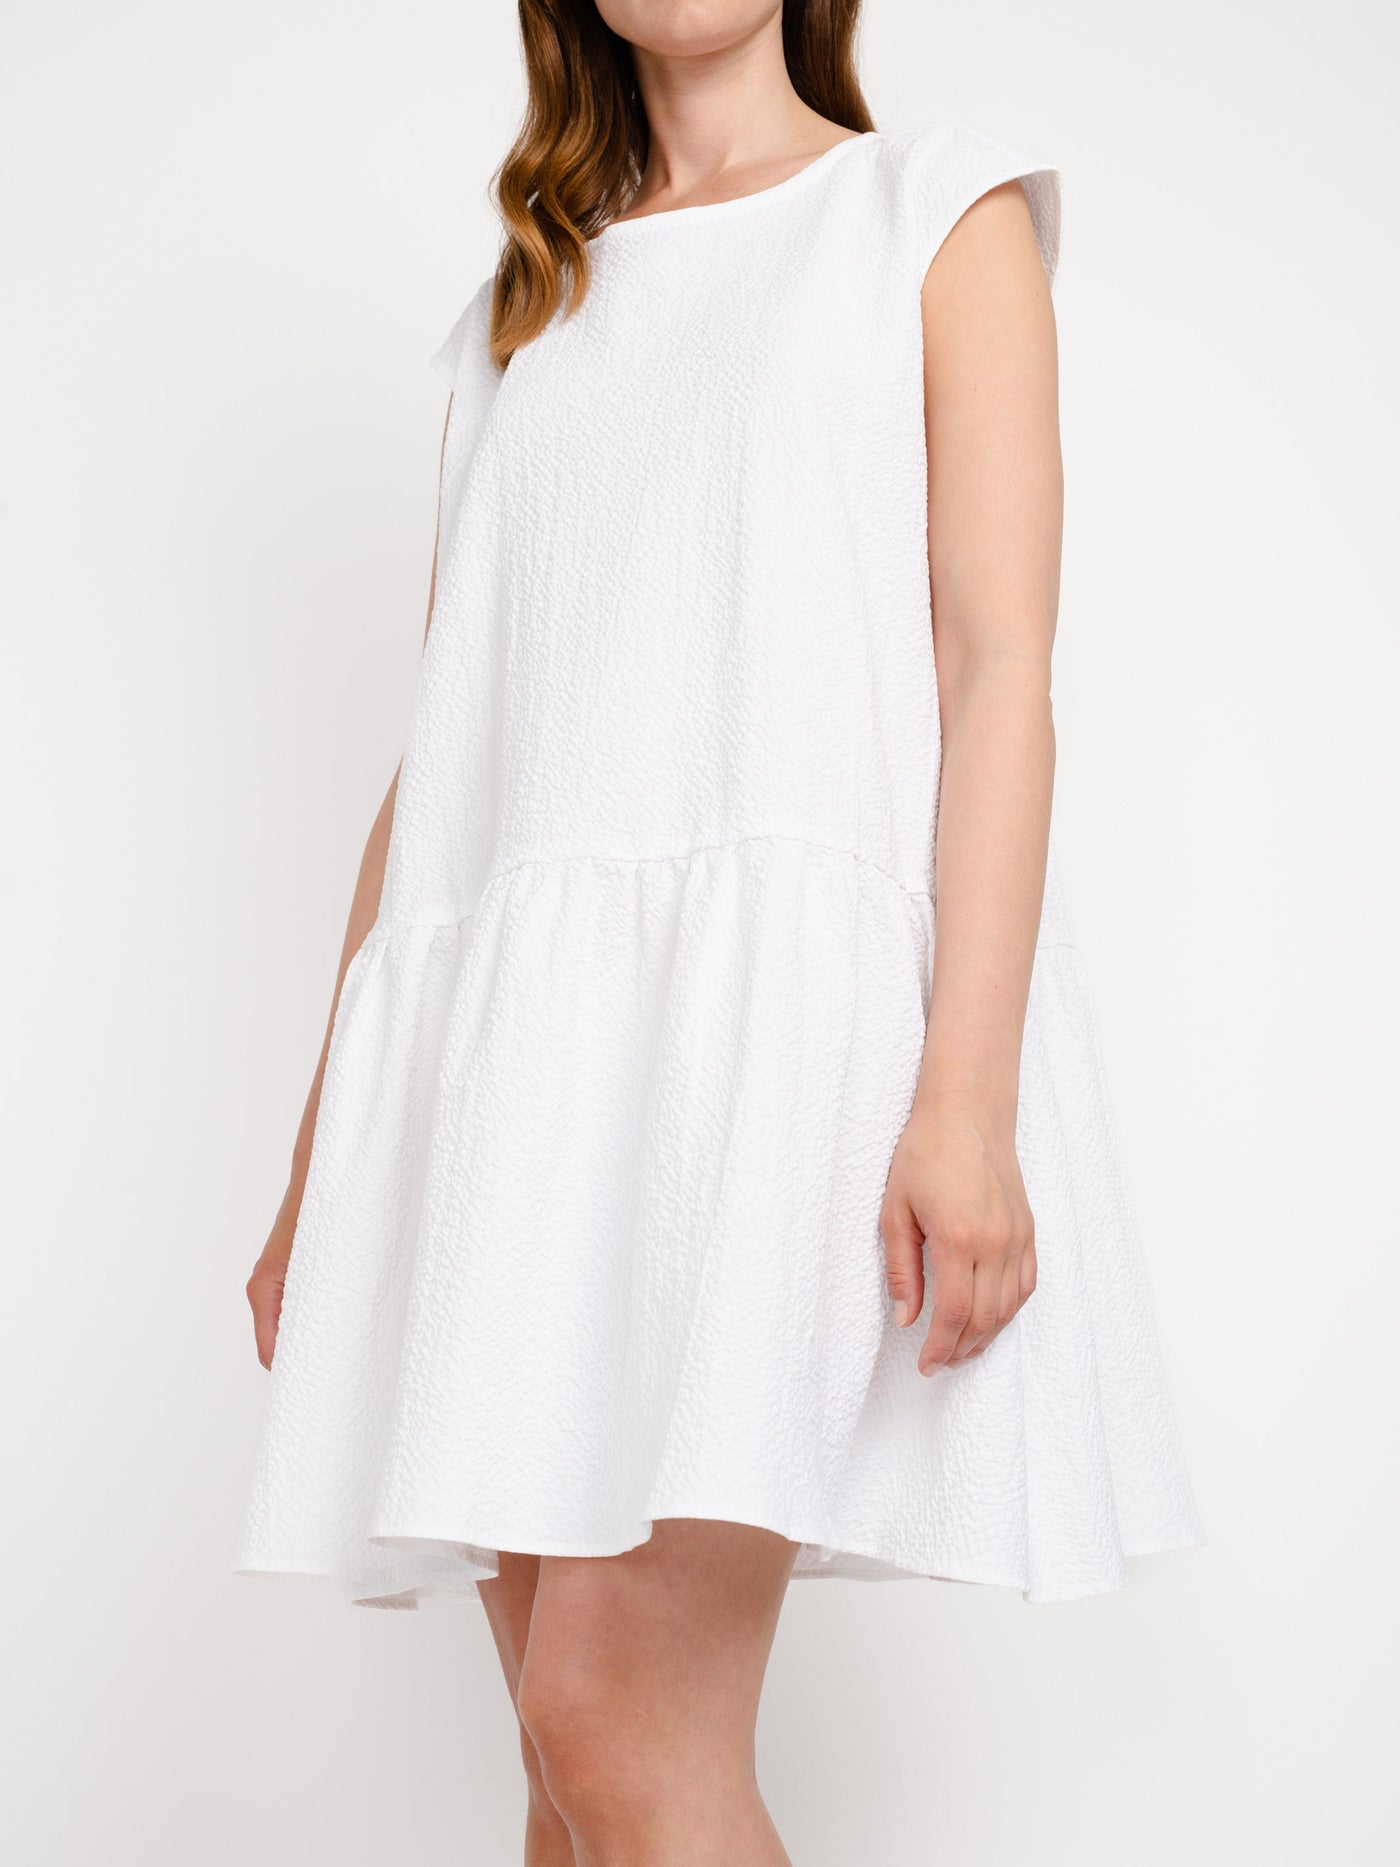 Paperbag dress, white